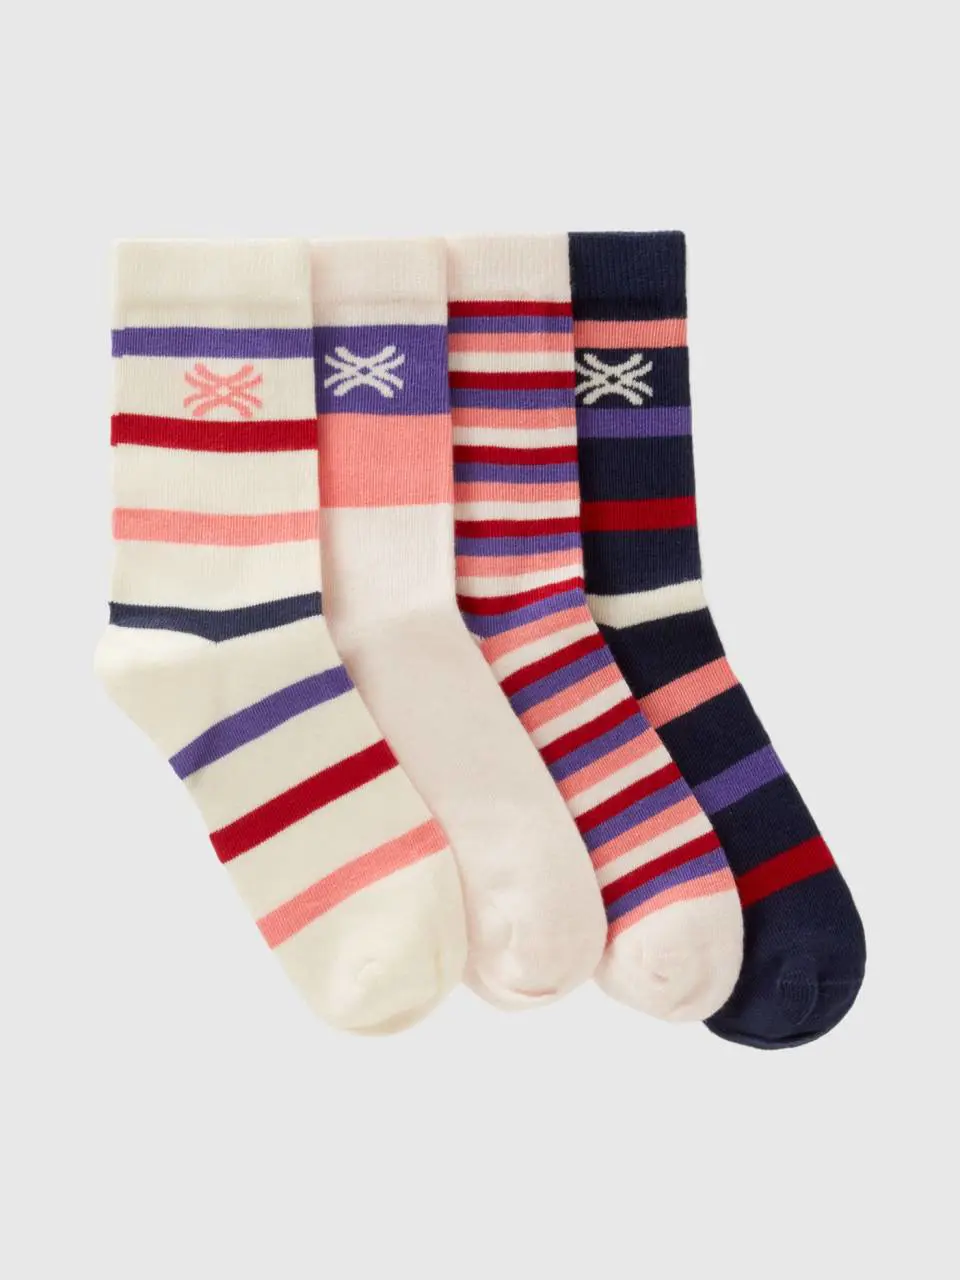 Benetton set of striped jacquard socks. 1